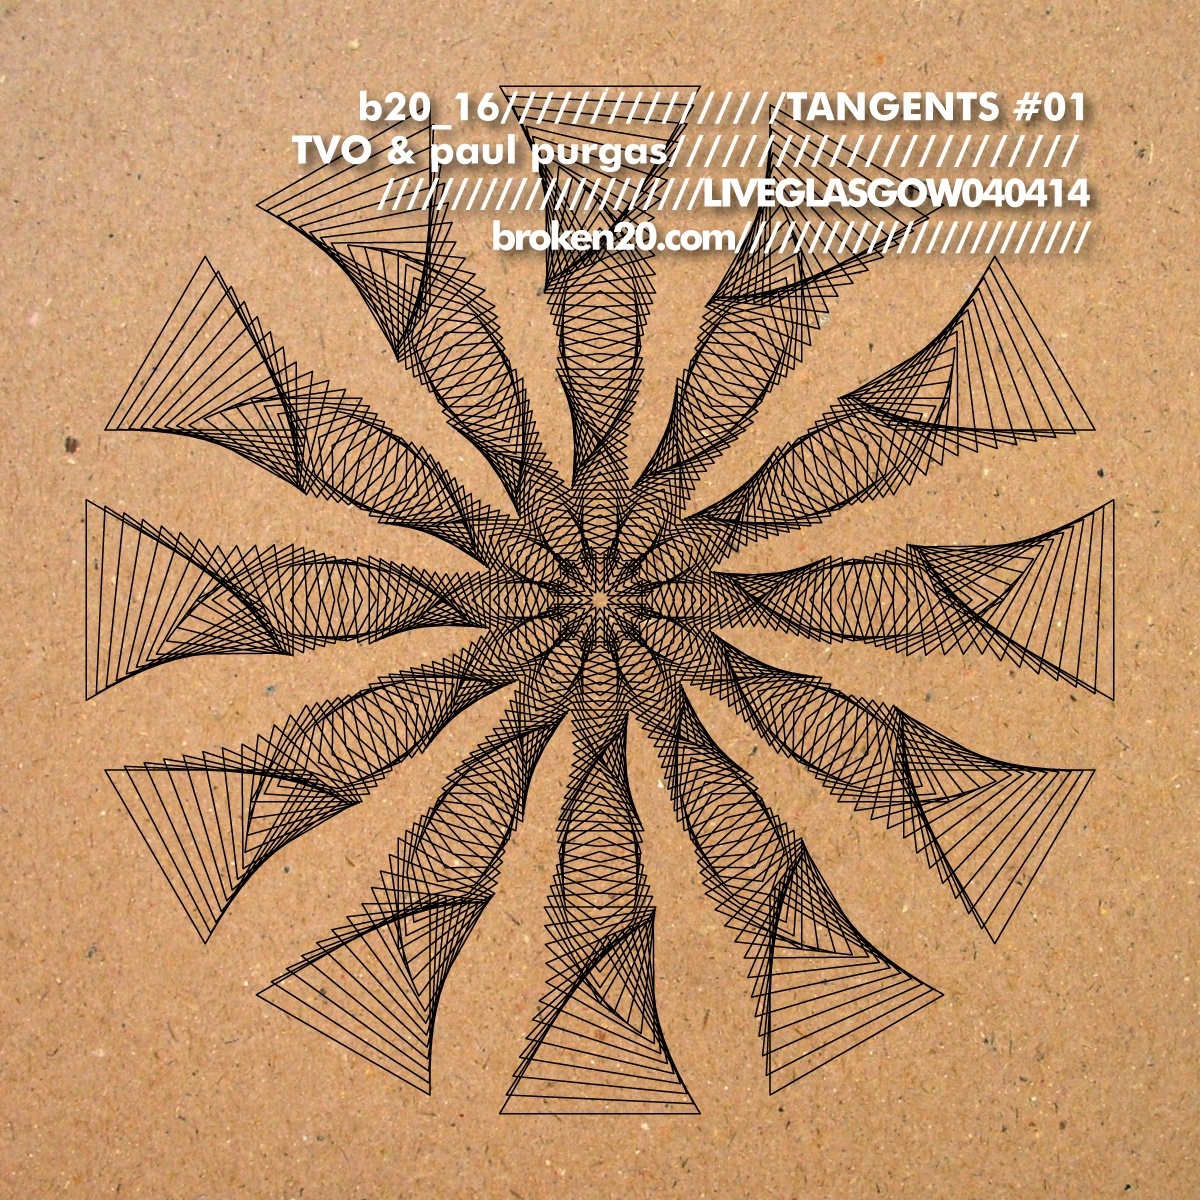 image cover: TVO & Paul Purgas - Tangents Series 01 LiveGlasgow040414 [B20_16]